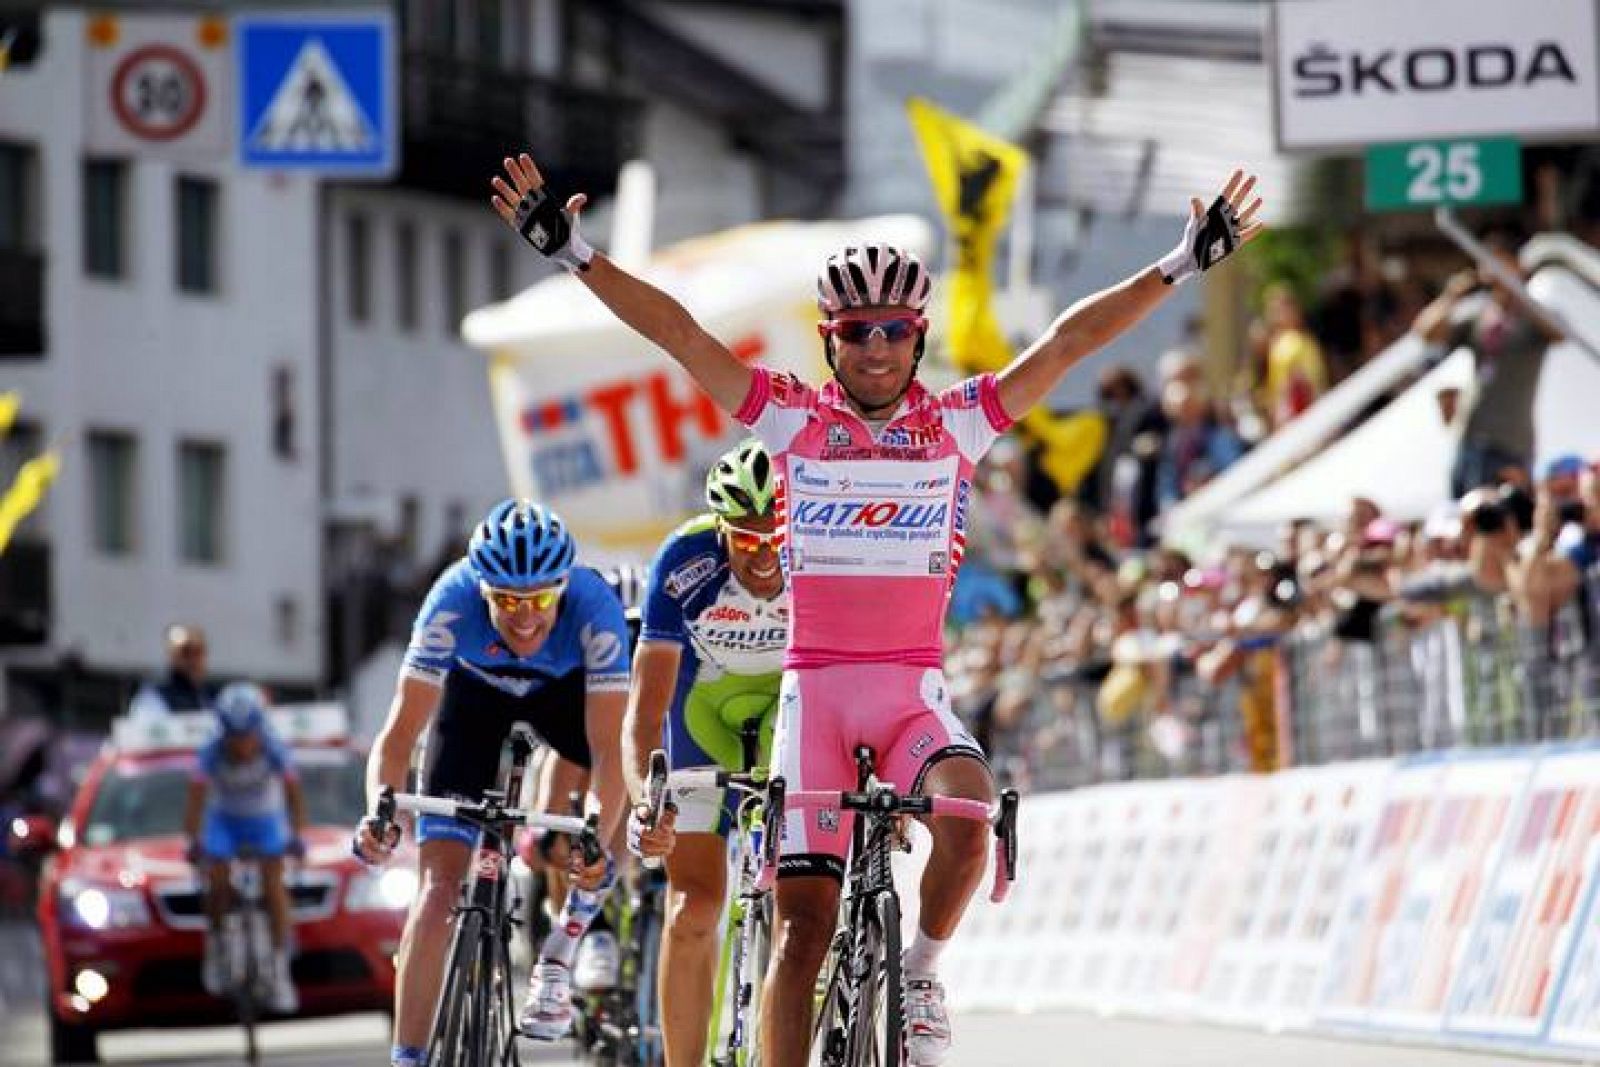 El ciclista español del Katusha, Joaquim 'Purito' Rodríguez, celebra la victoria conseguida en la decimoséptima etapa del Giro